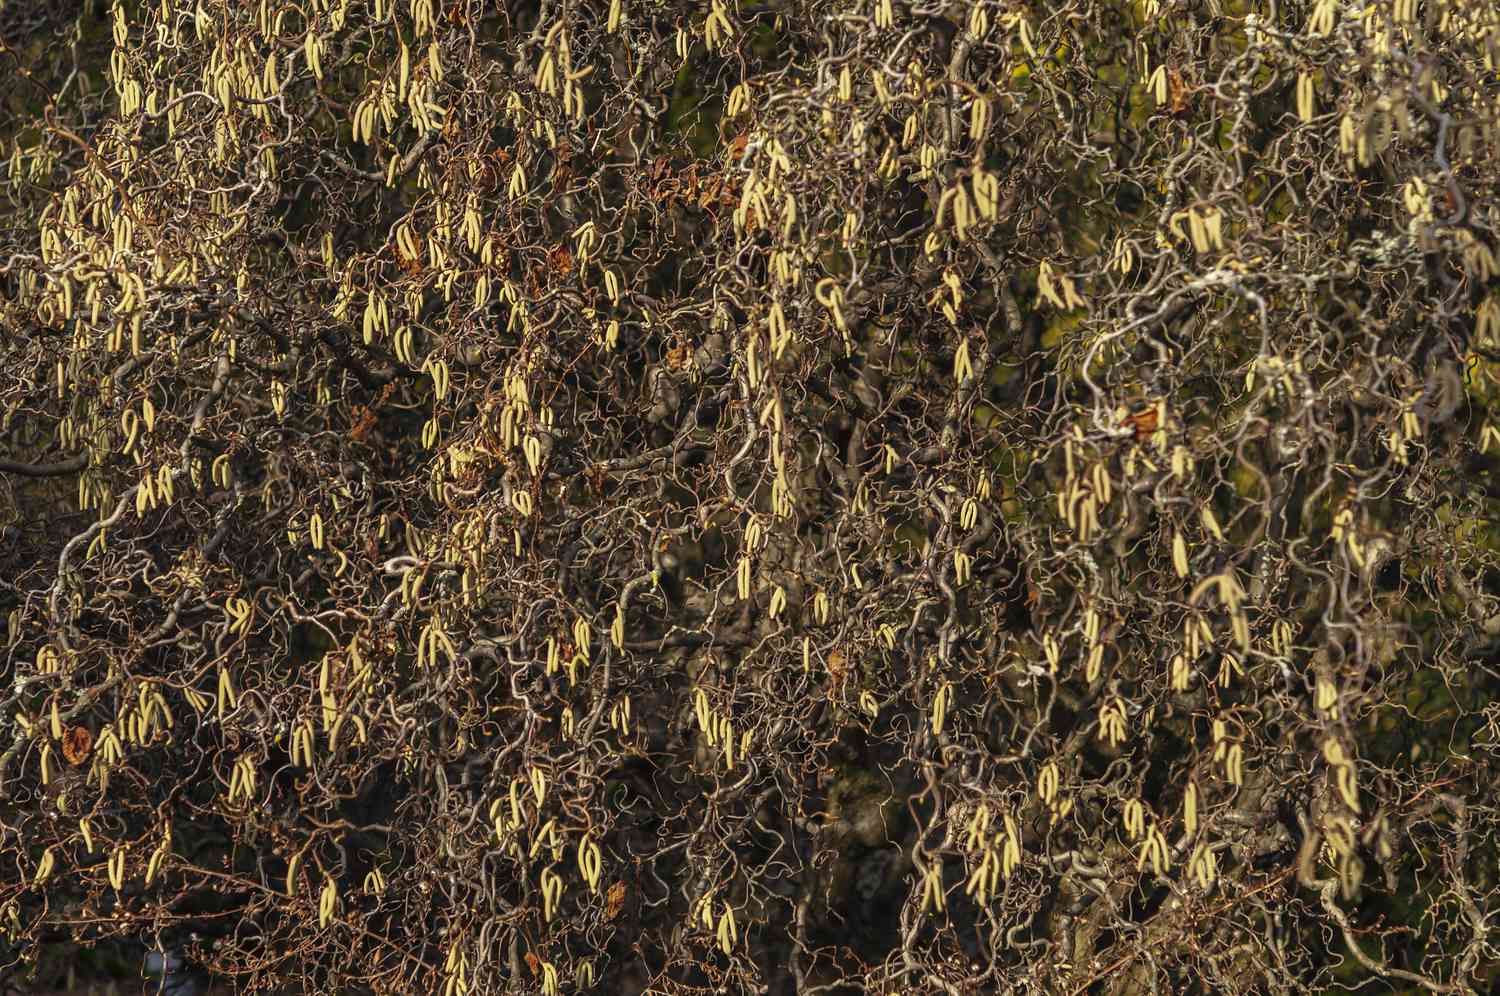 Harry lauder's walking stick shrub with yellow stems